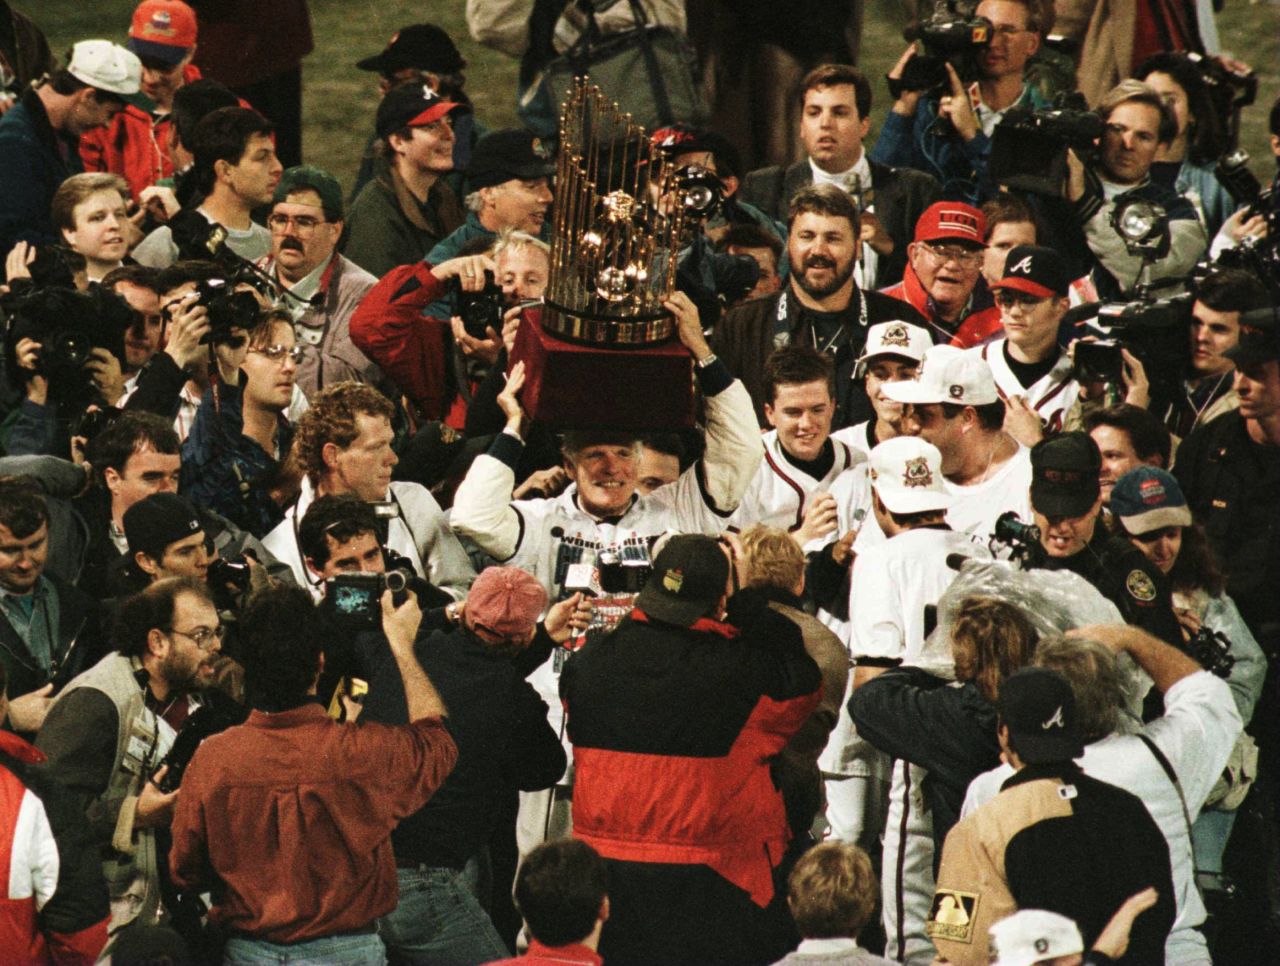 Turner hoists the Commissioner's Trophy after the Braves' triumph.